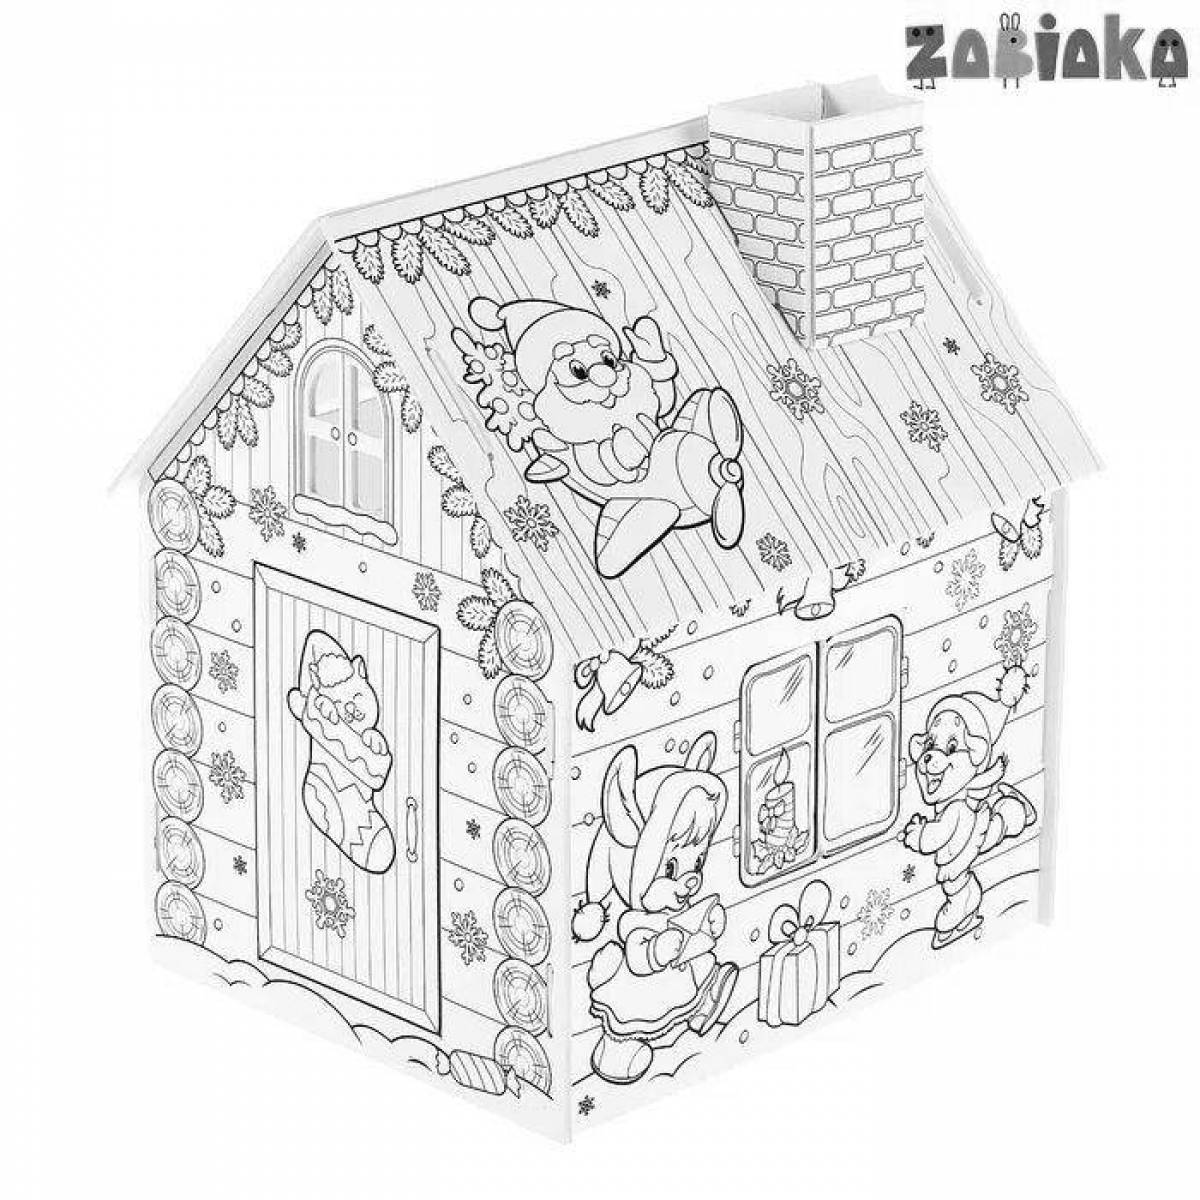 Wonderful cardboard house coloring for kids